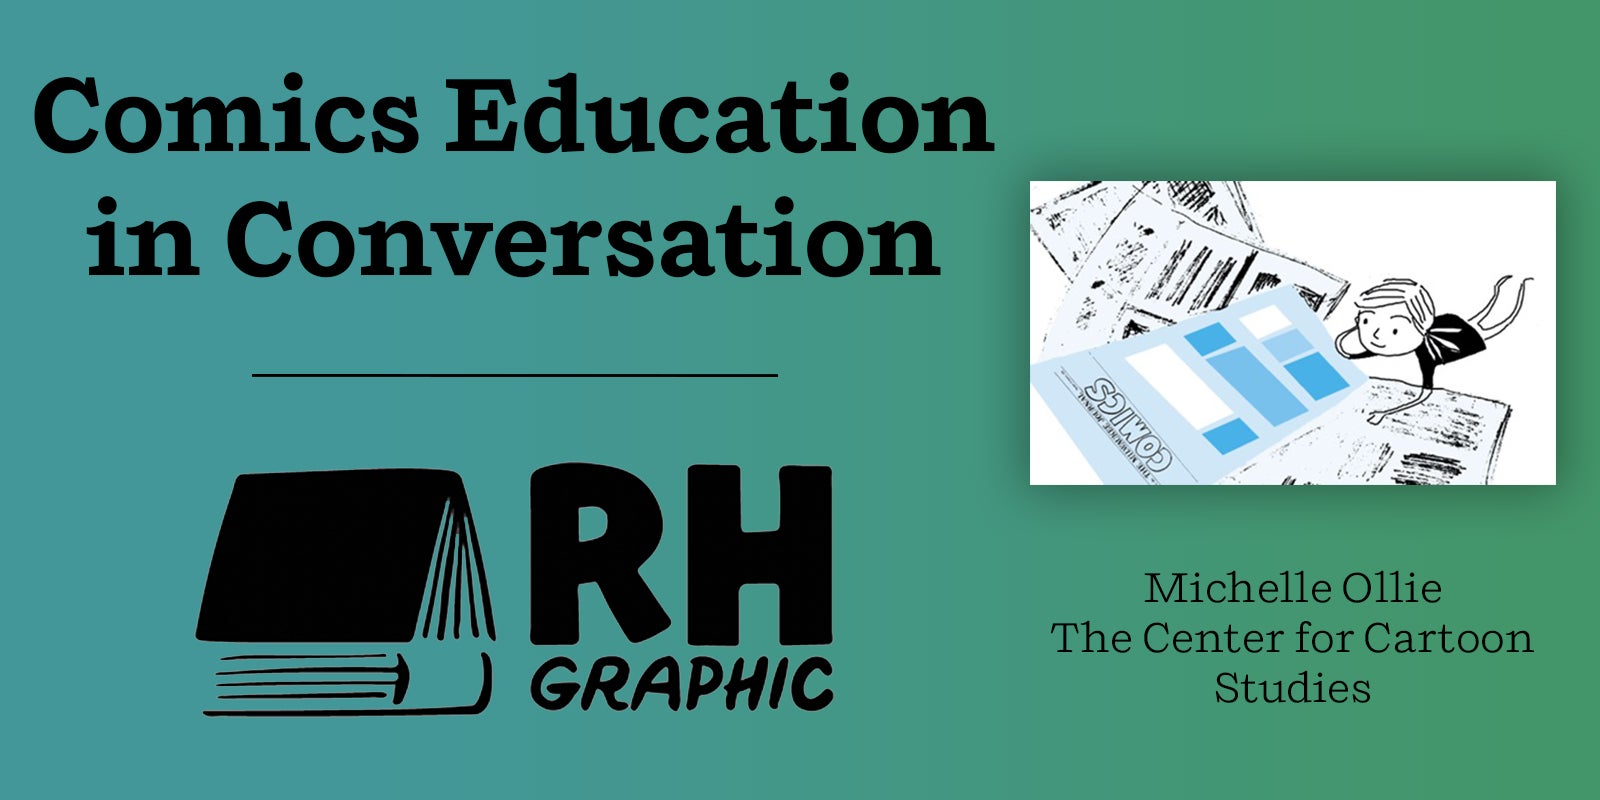 Comics Education in Conversation: Michelle Ollie